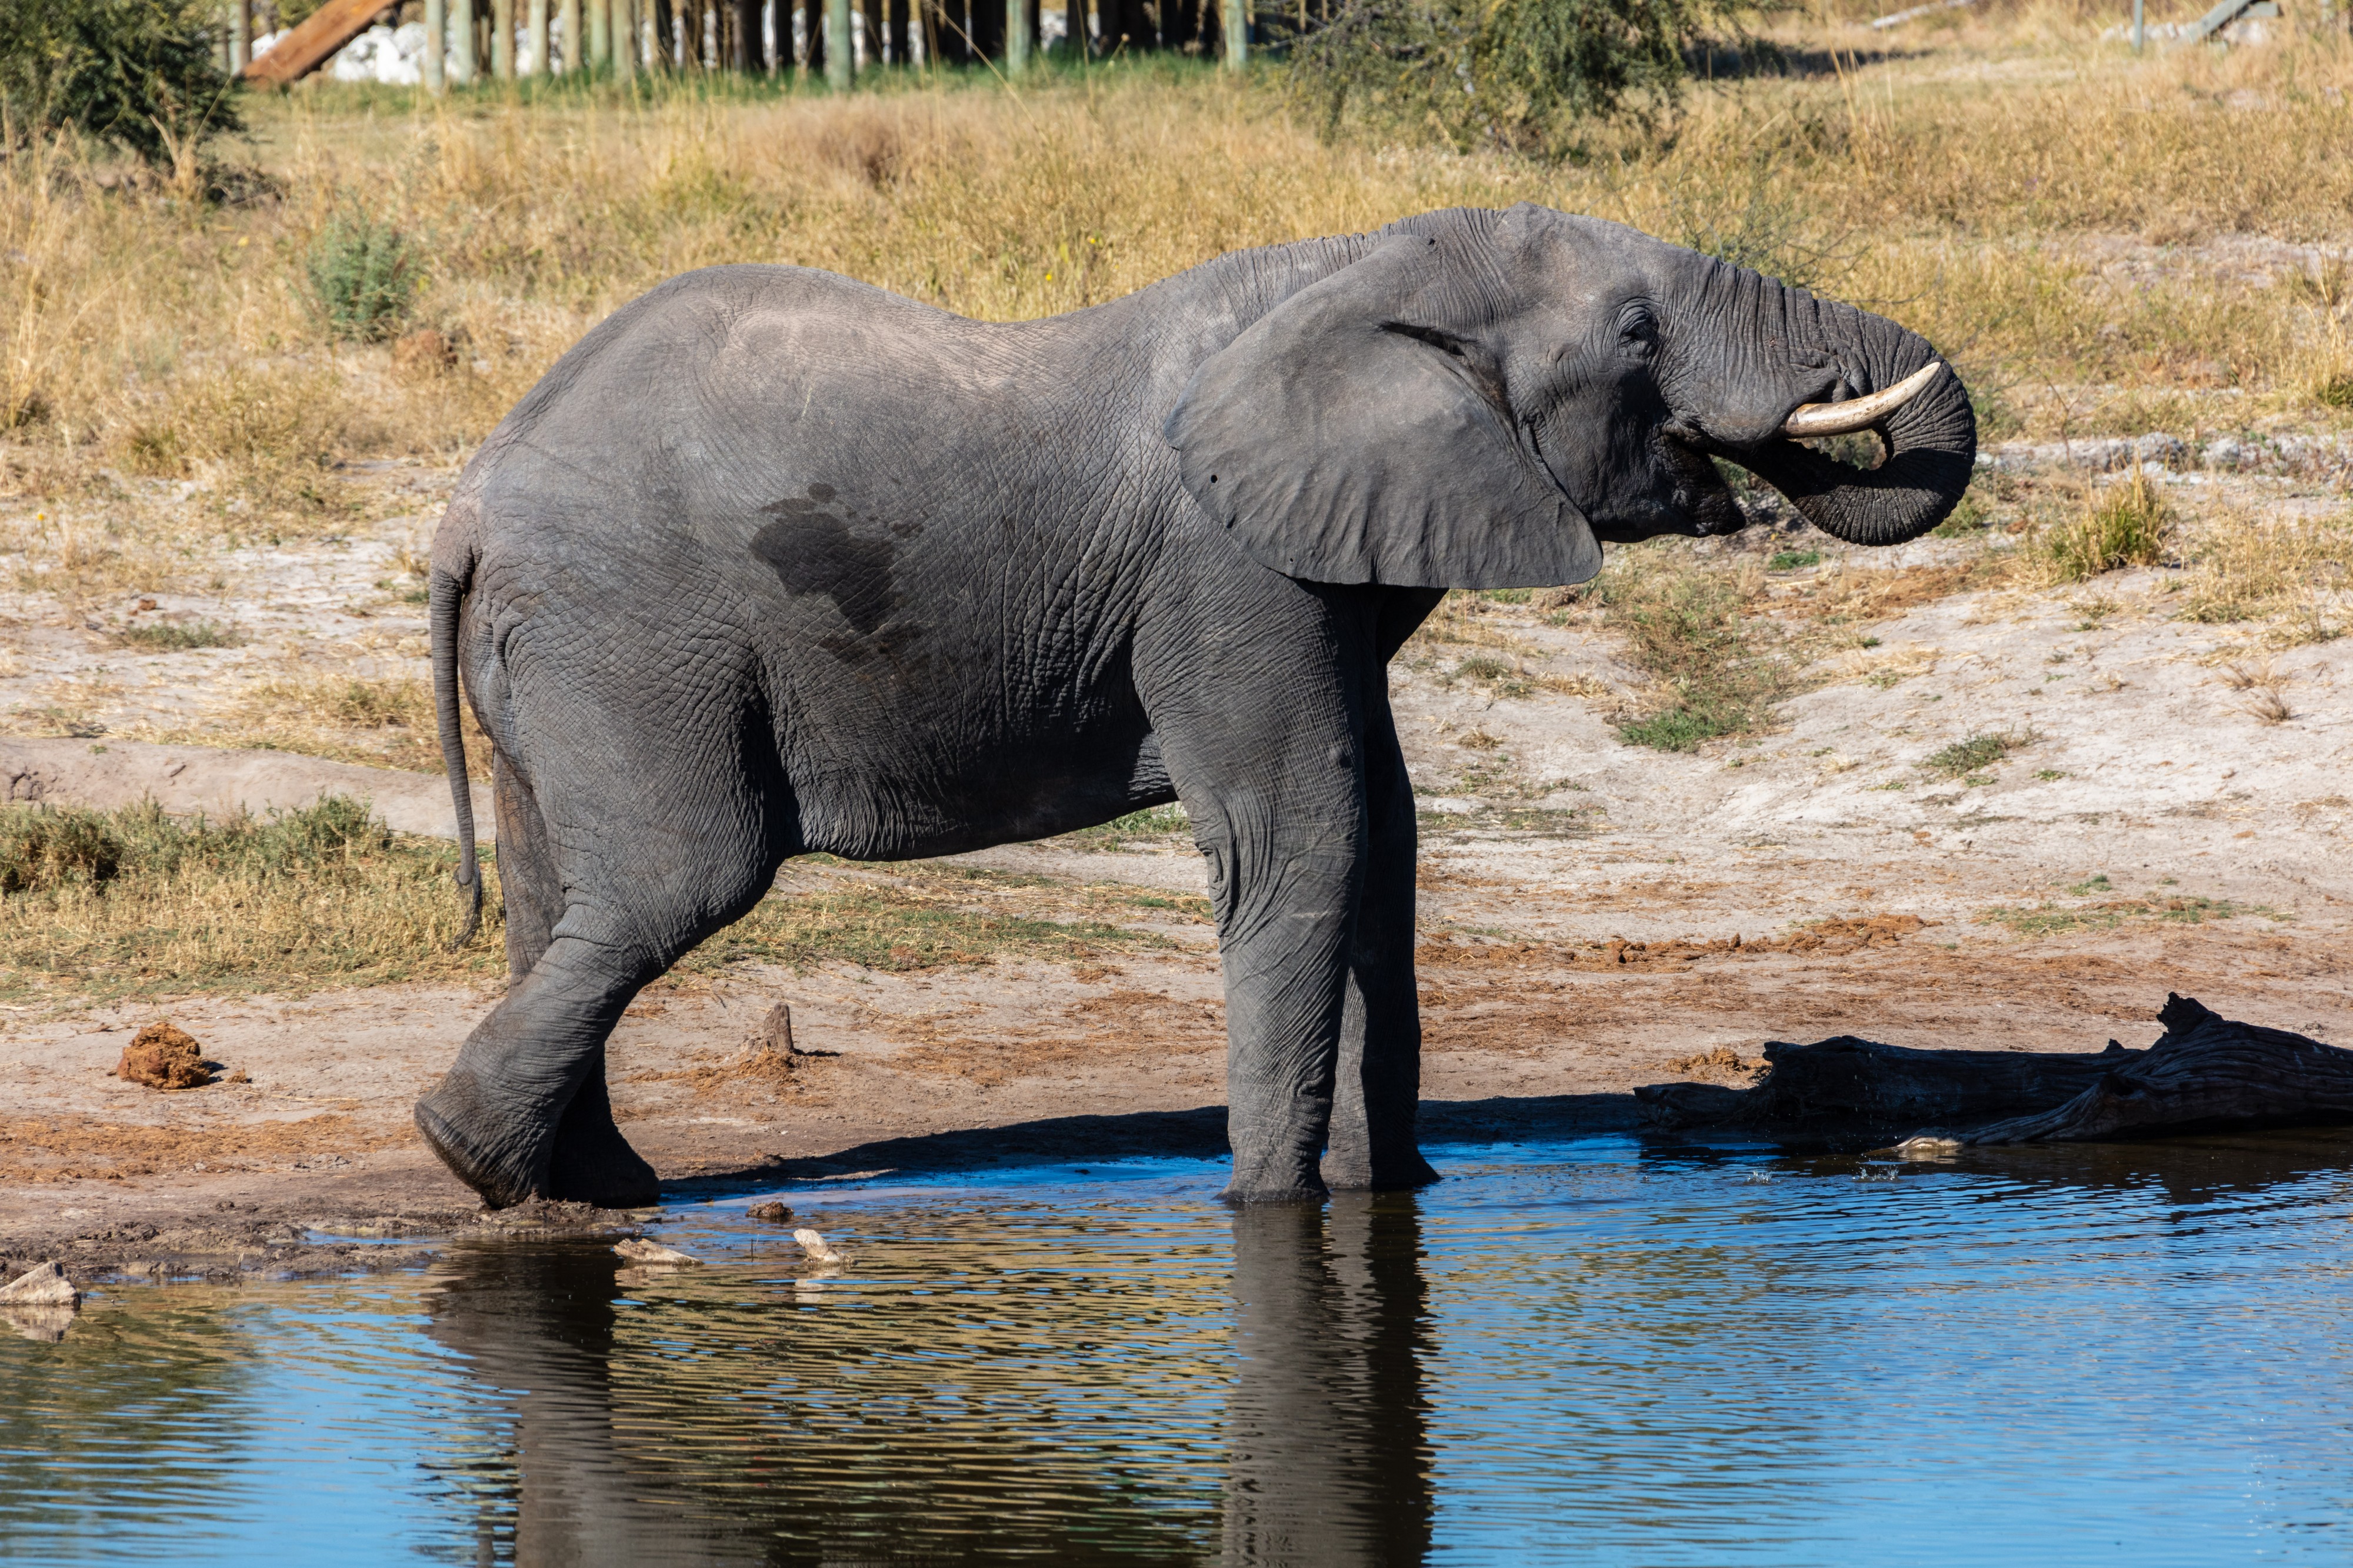 Elefante africano de sabana (Loxodonta africana), Elephant Sands, Botsuana, 2018-07-28, DD 112